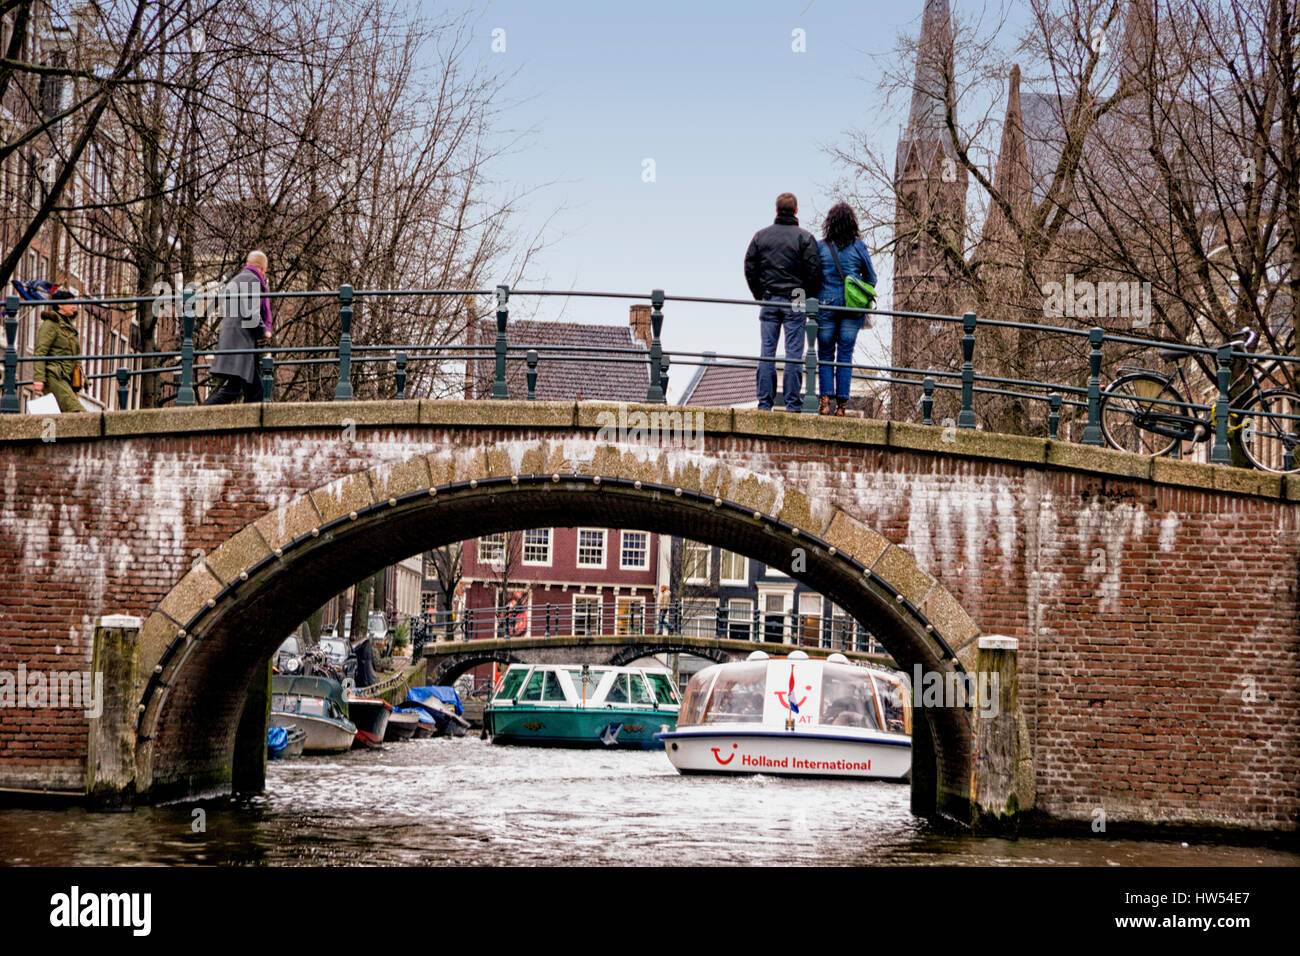 Tourists standing on a bridge, watching canal boats. Amsterdam, Netherlands. Stock Photo